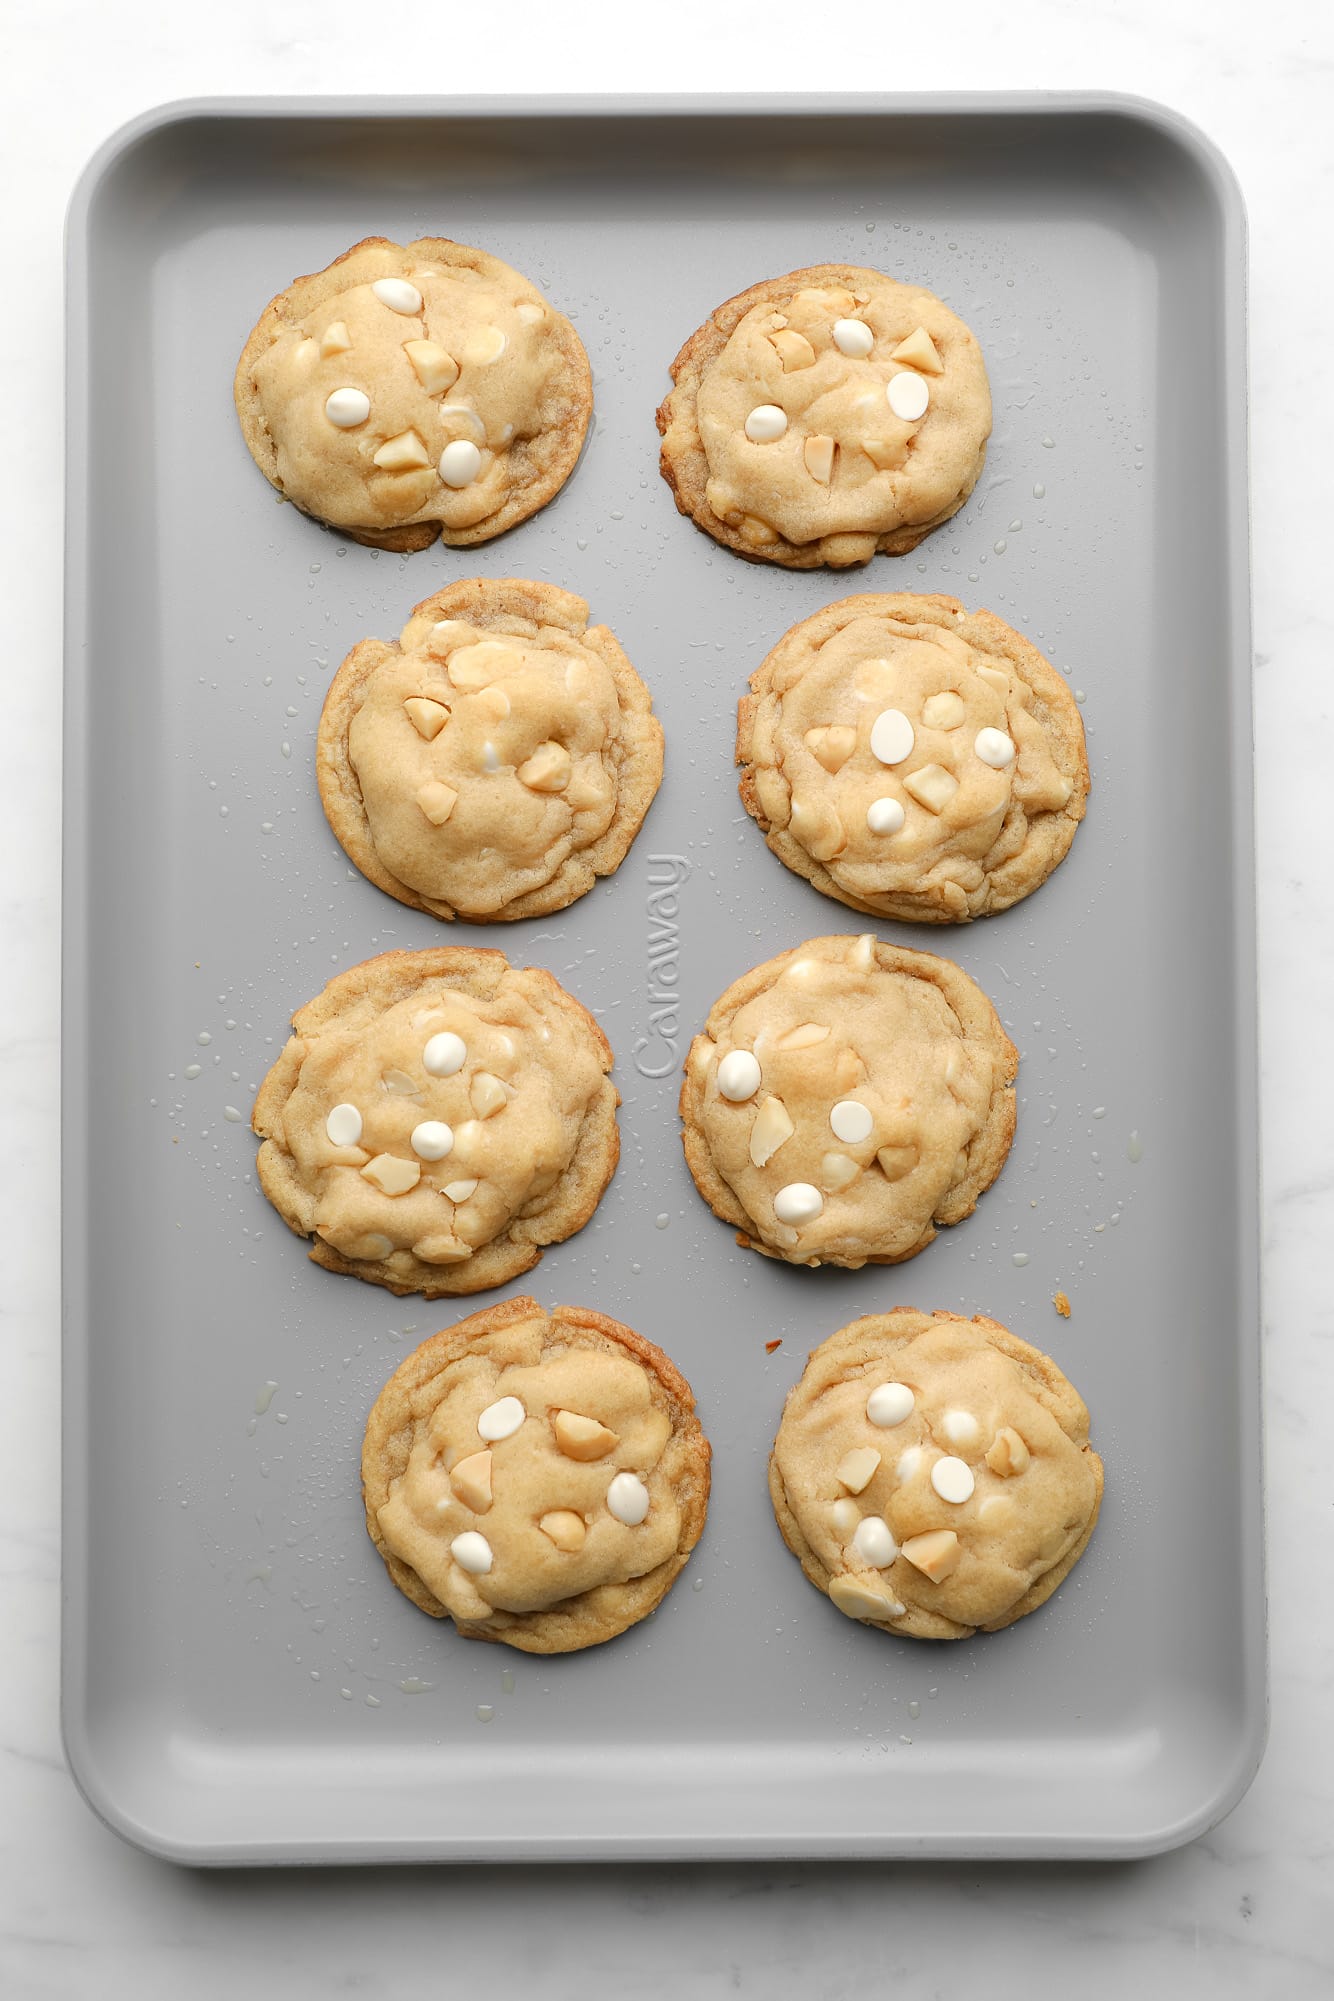 baked Vegan White Chocolate Macadamia Nut Cookies on a metal baking sheet.